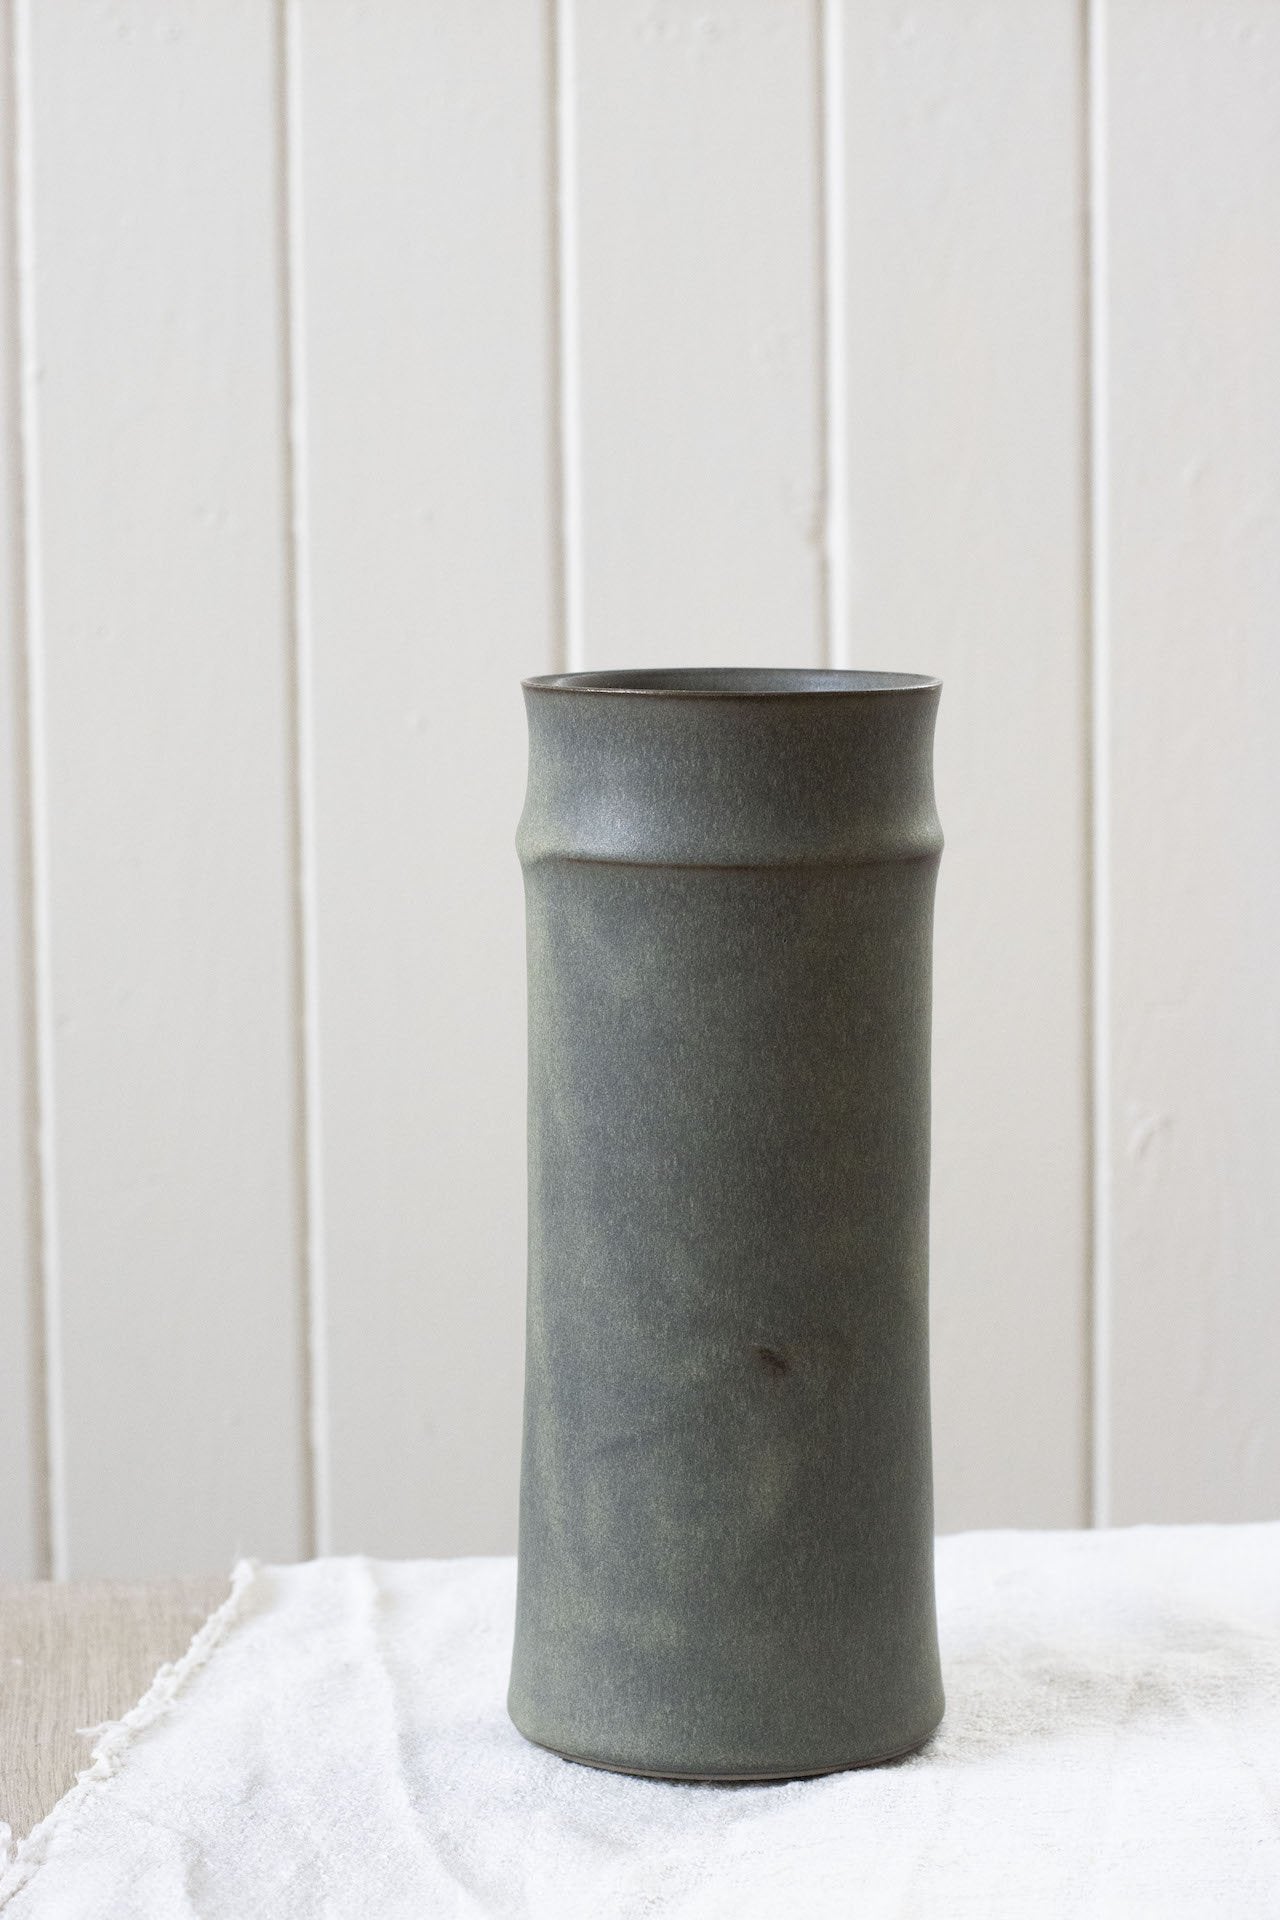 Medium Cylinder | Moss Green | by Borja Moronta - Lifestory